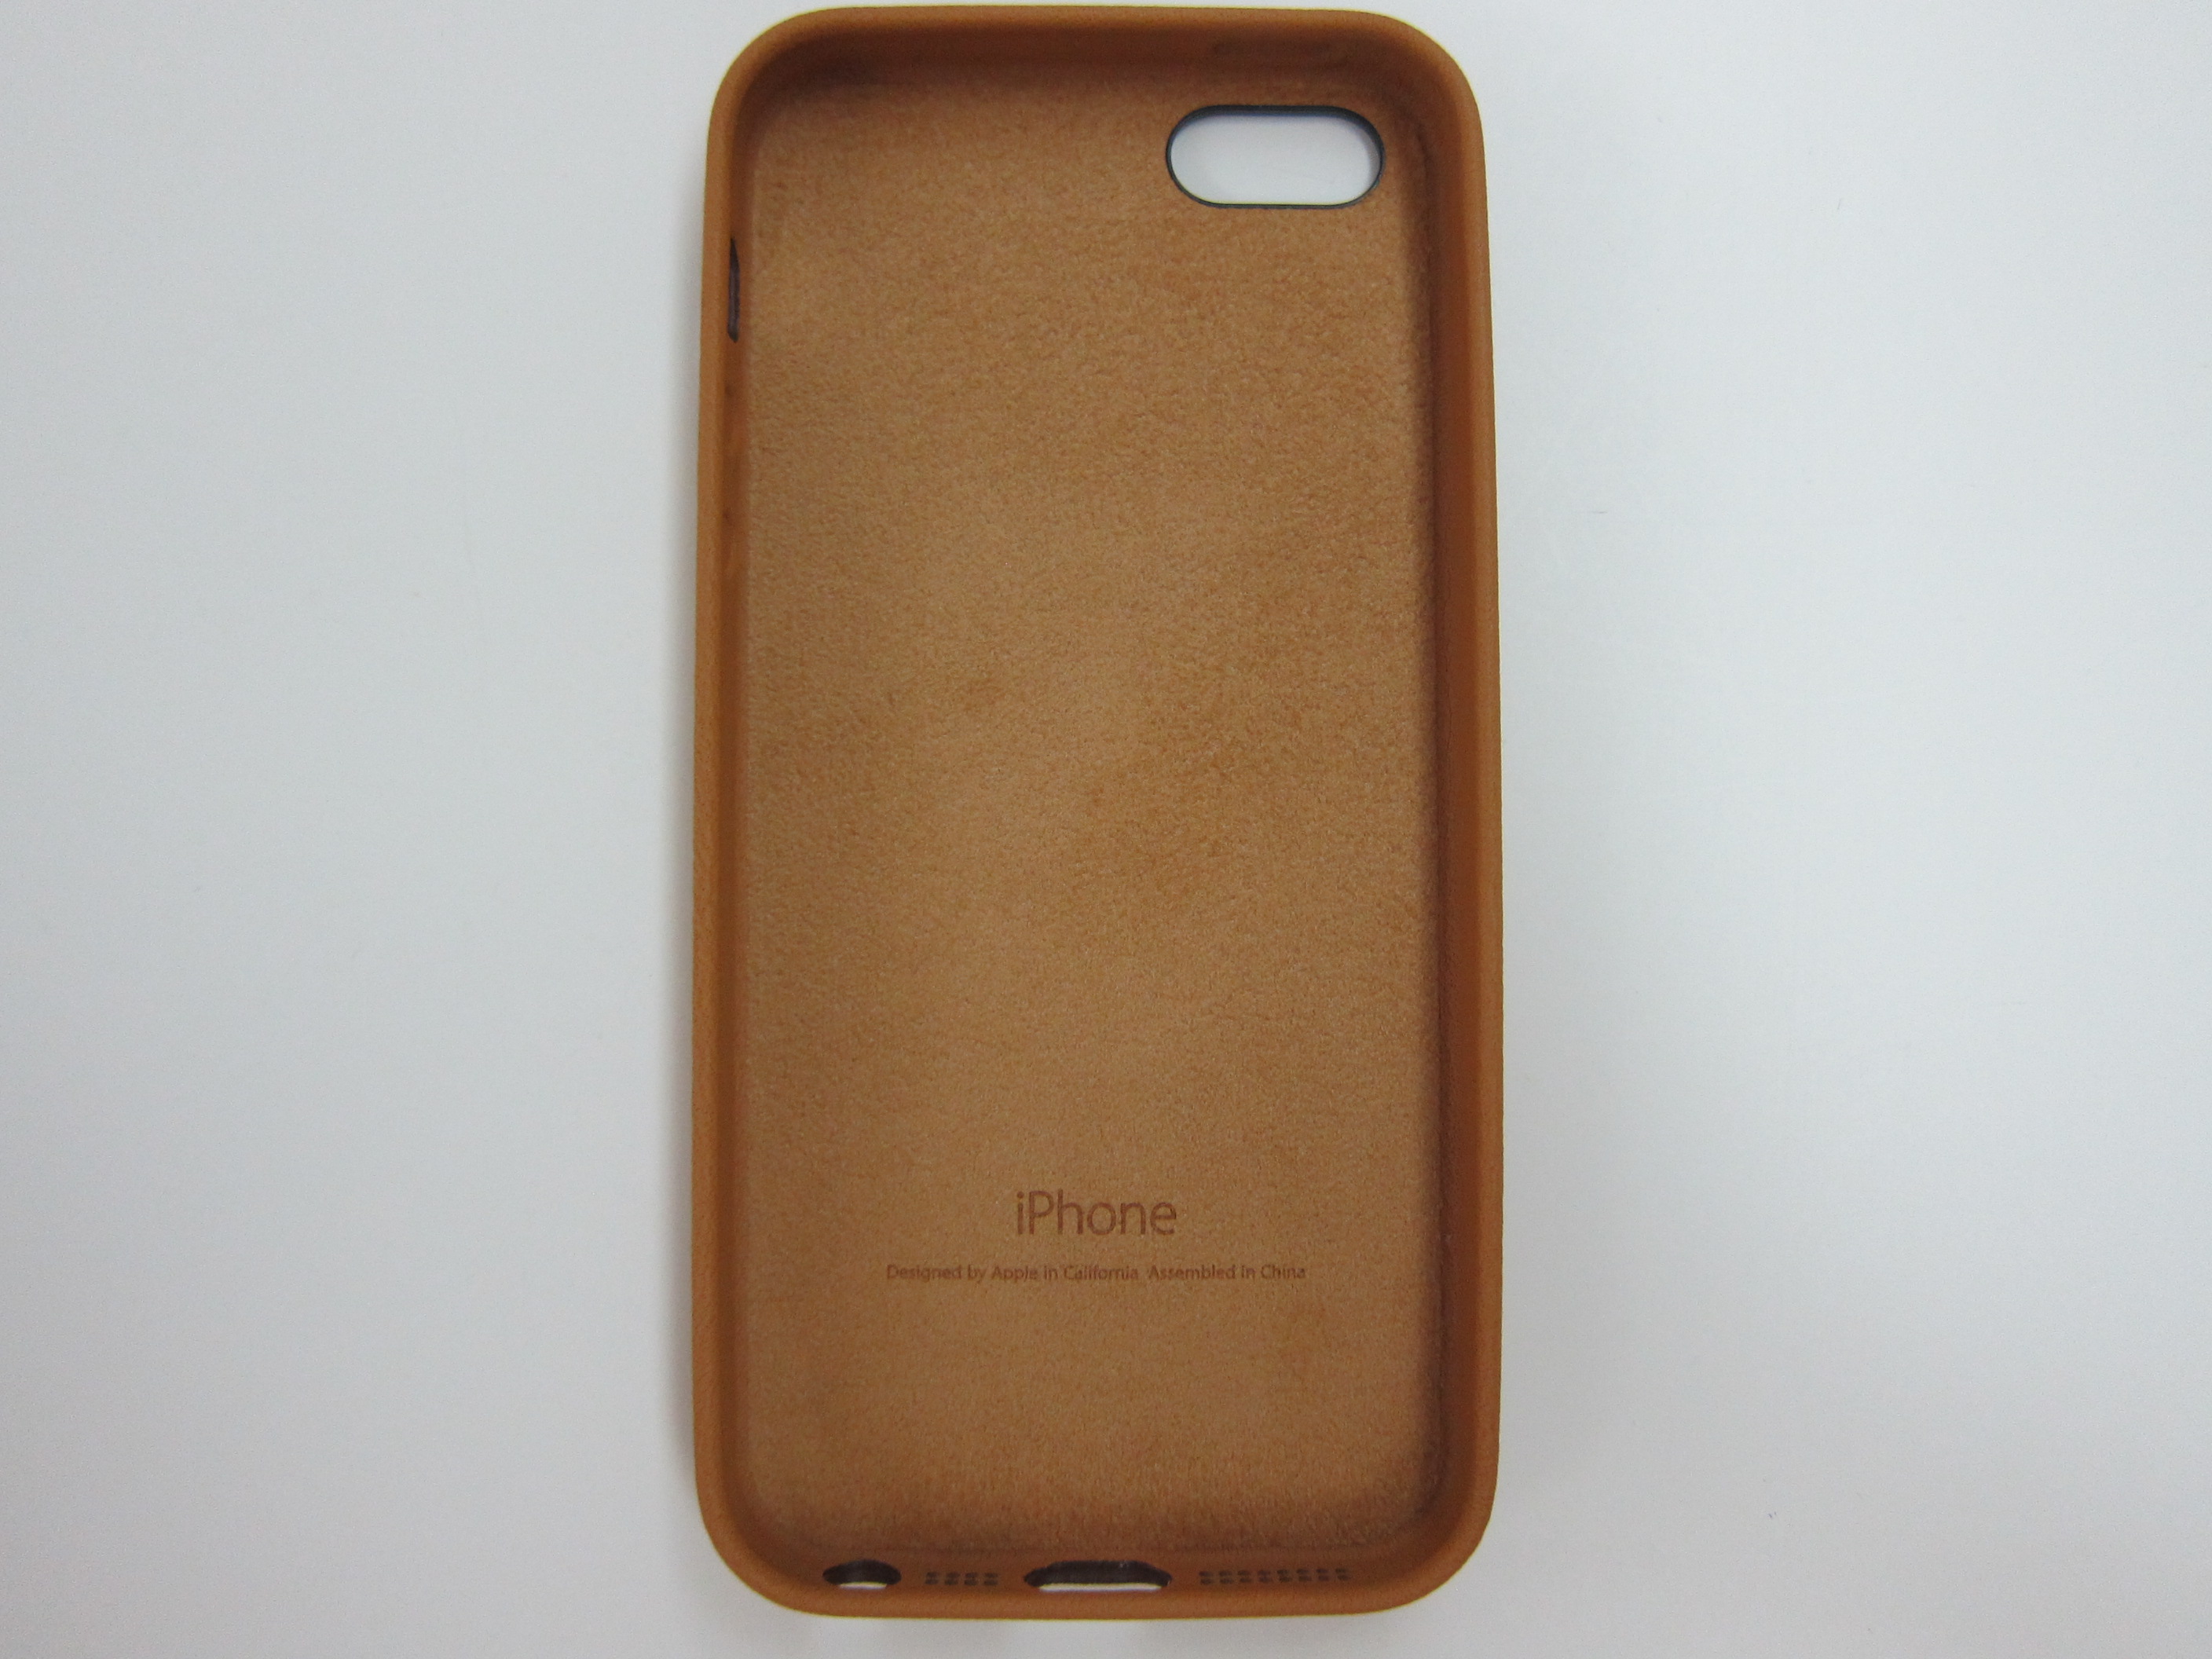 Apple iPhone 5s Case (Brown) « Blog  lesterchan.net